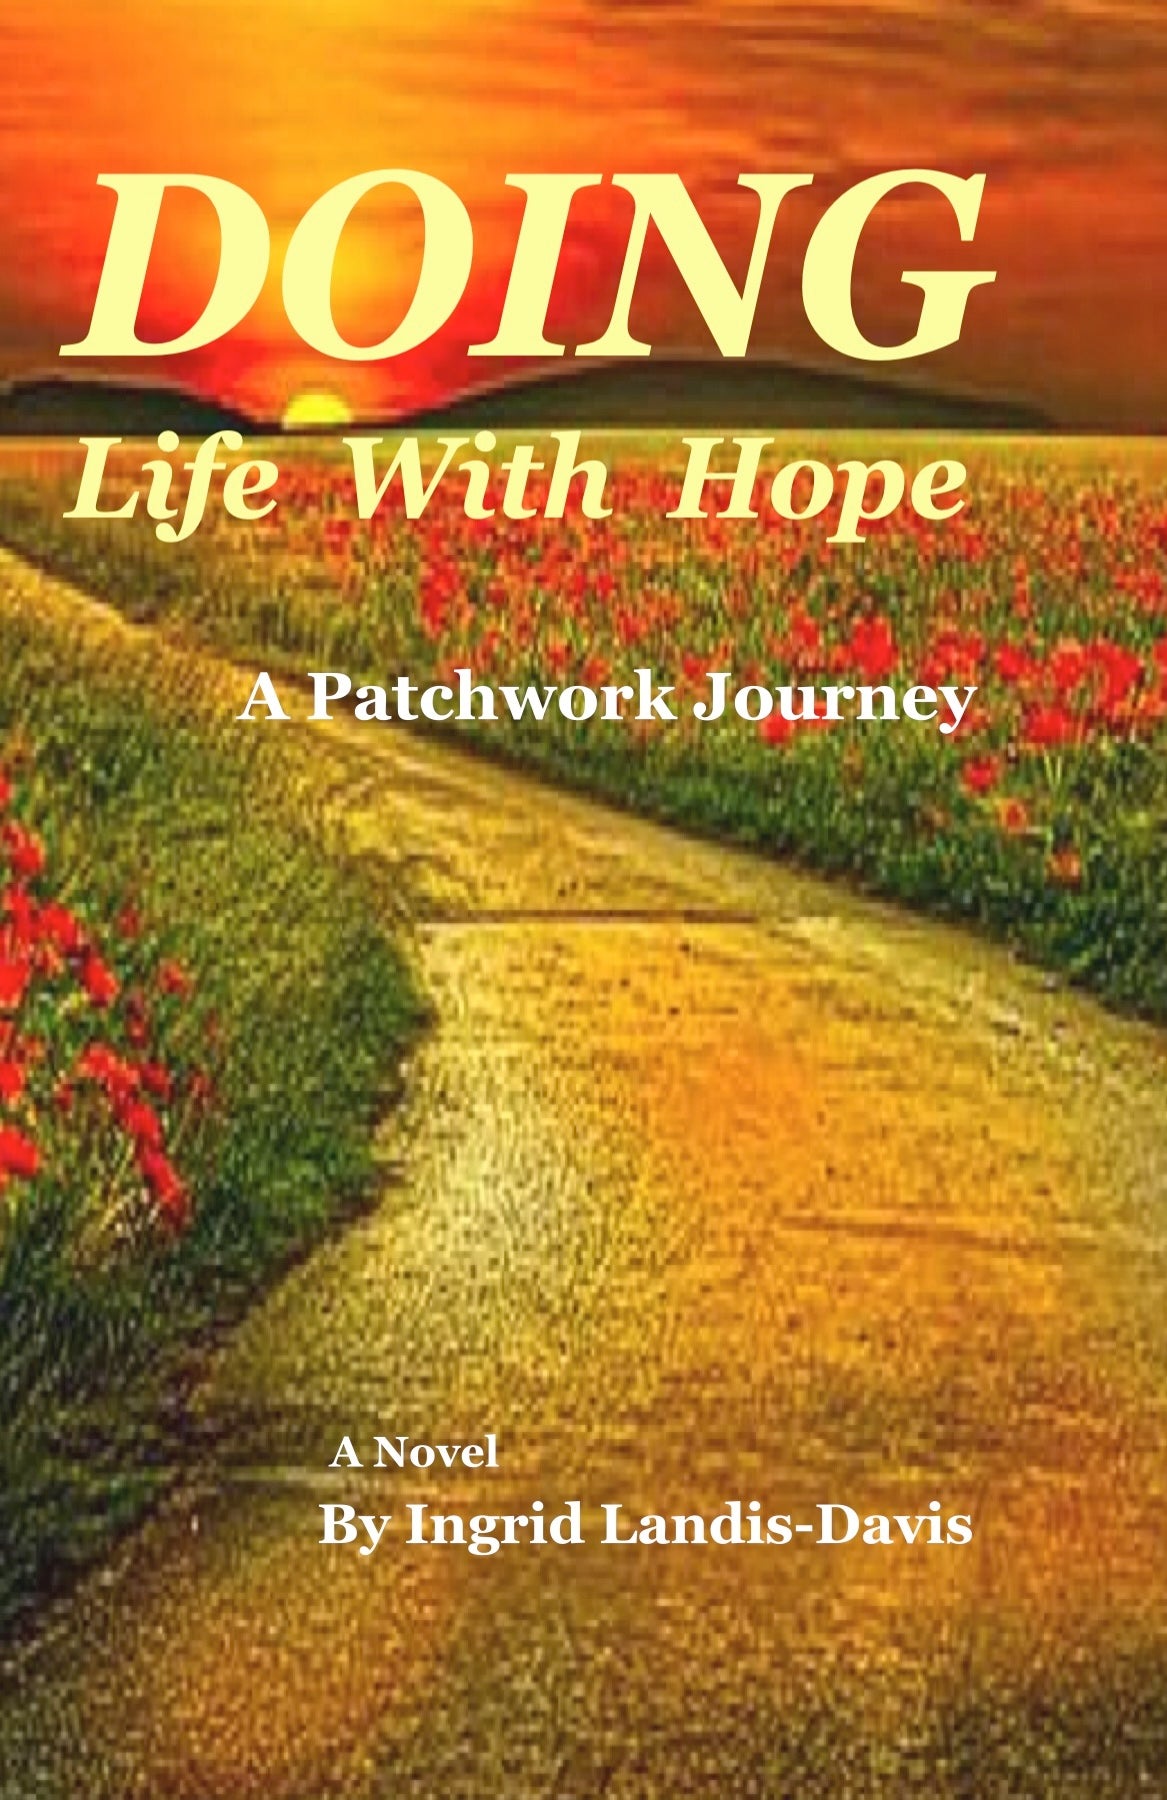 Doing Life With Hope - A Patchwork Journey - Novel by Ingrid Landis-Davis